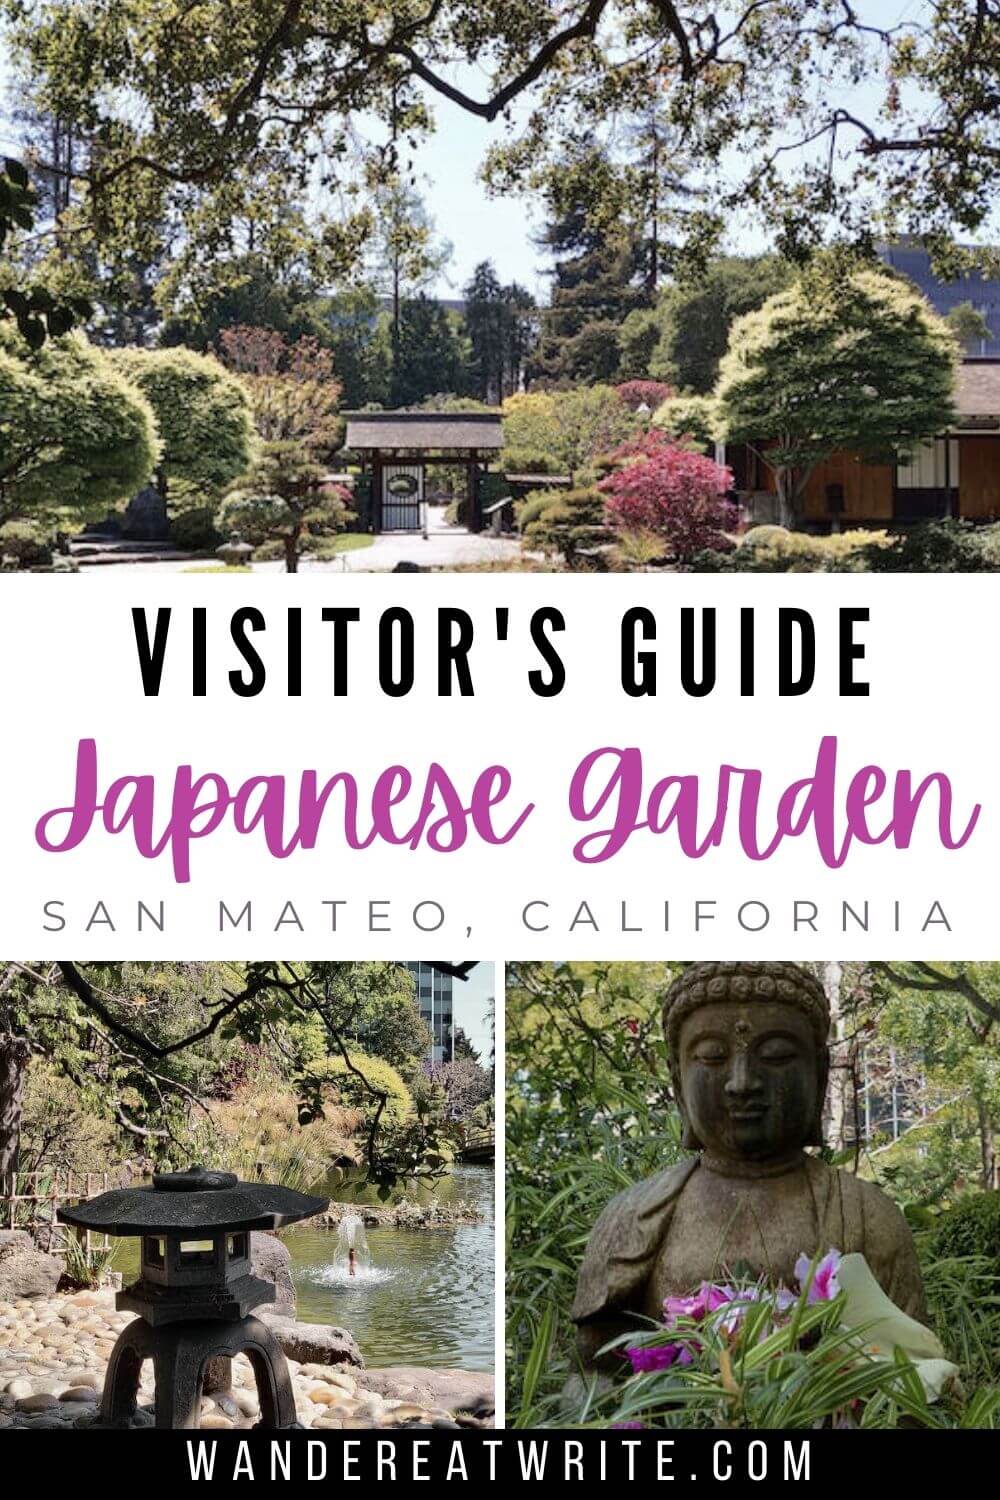 Visitor's Guide: Japanese Garden San Mateo, California